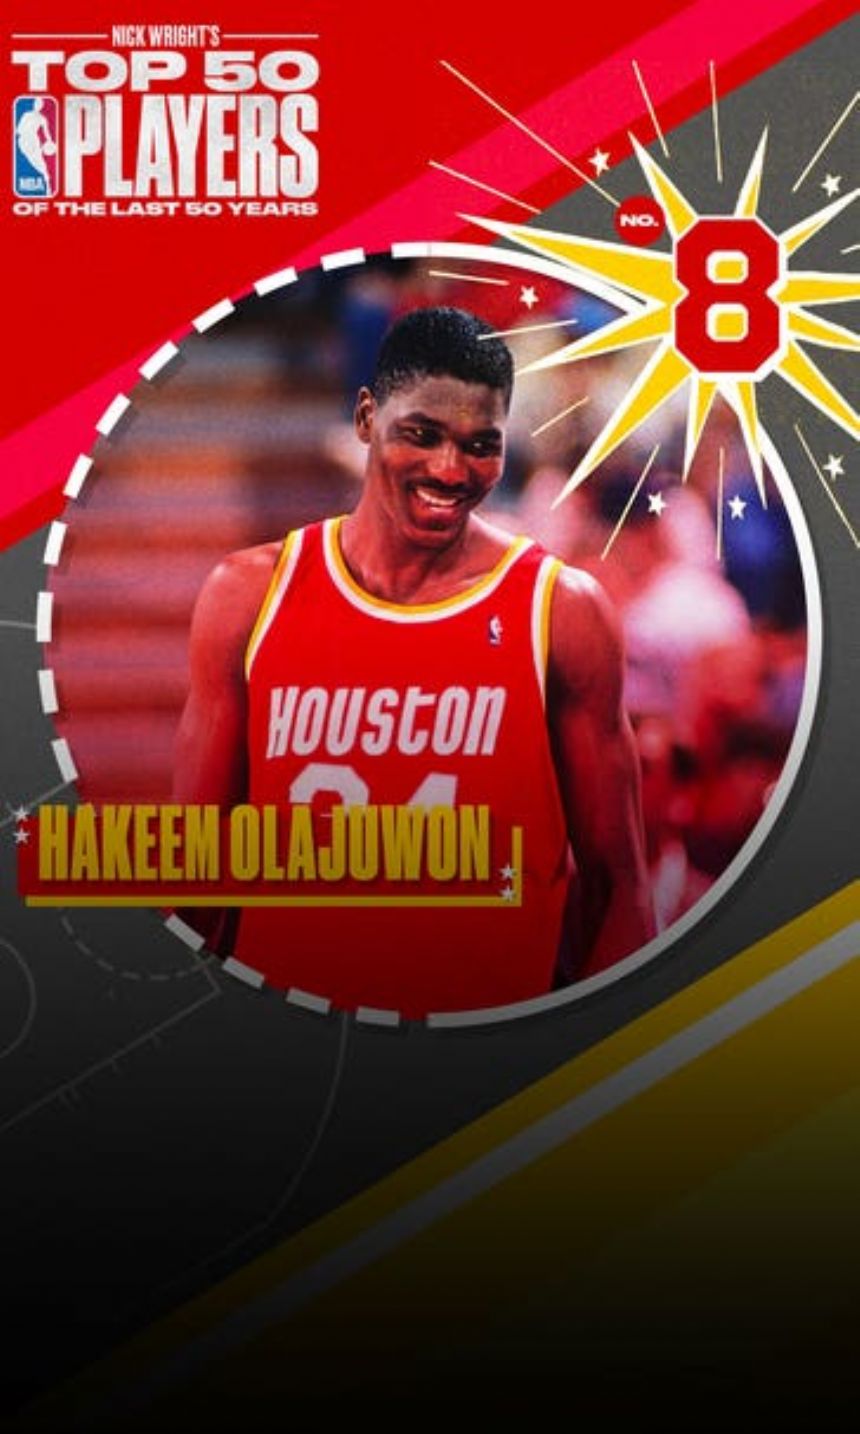 Top 50 NBA players from last 50 years: Hakeem Olajuwon ranks No. 8